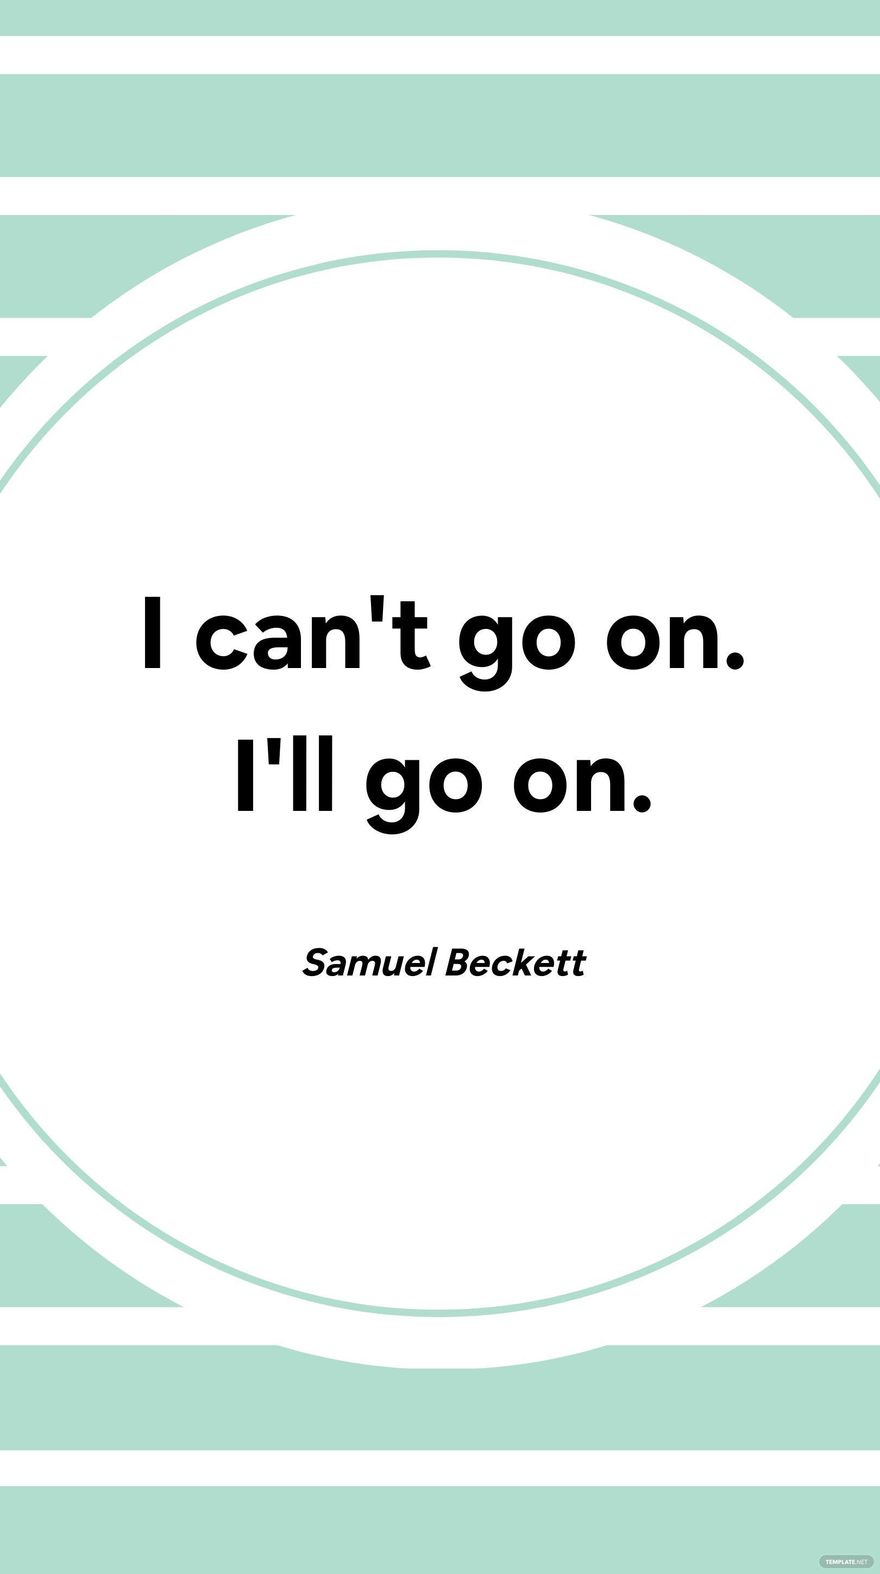 Samuel Beckett - I can't go on. I'll go on.